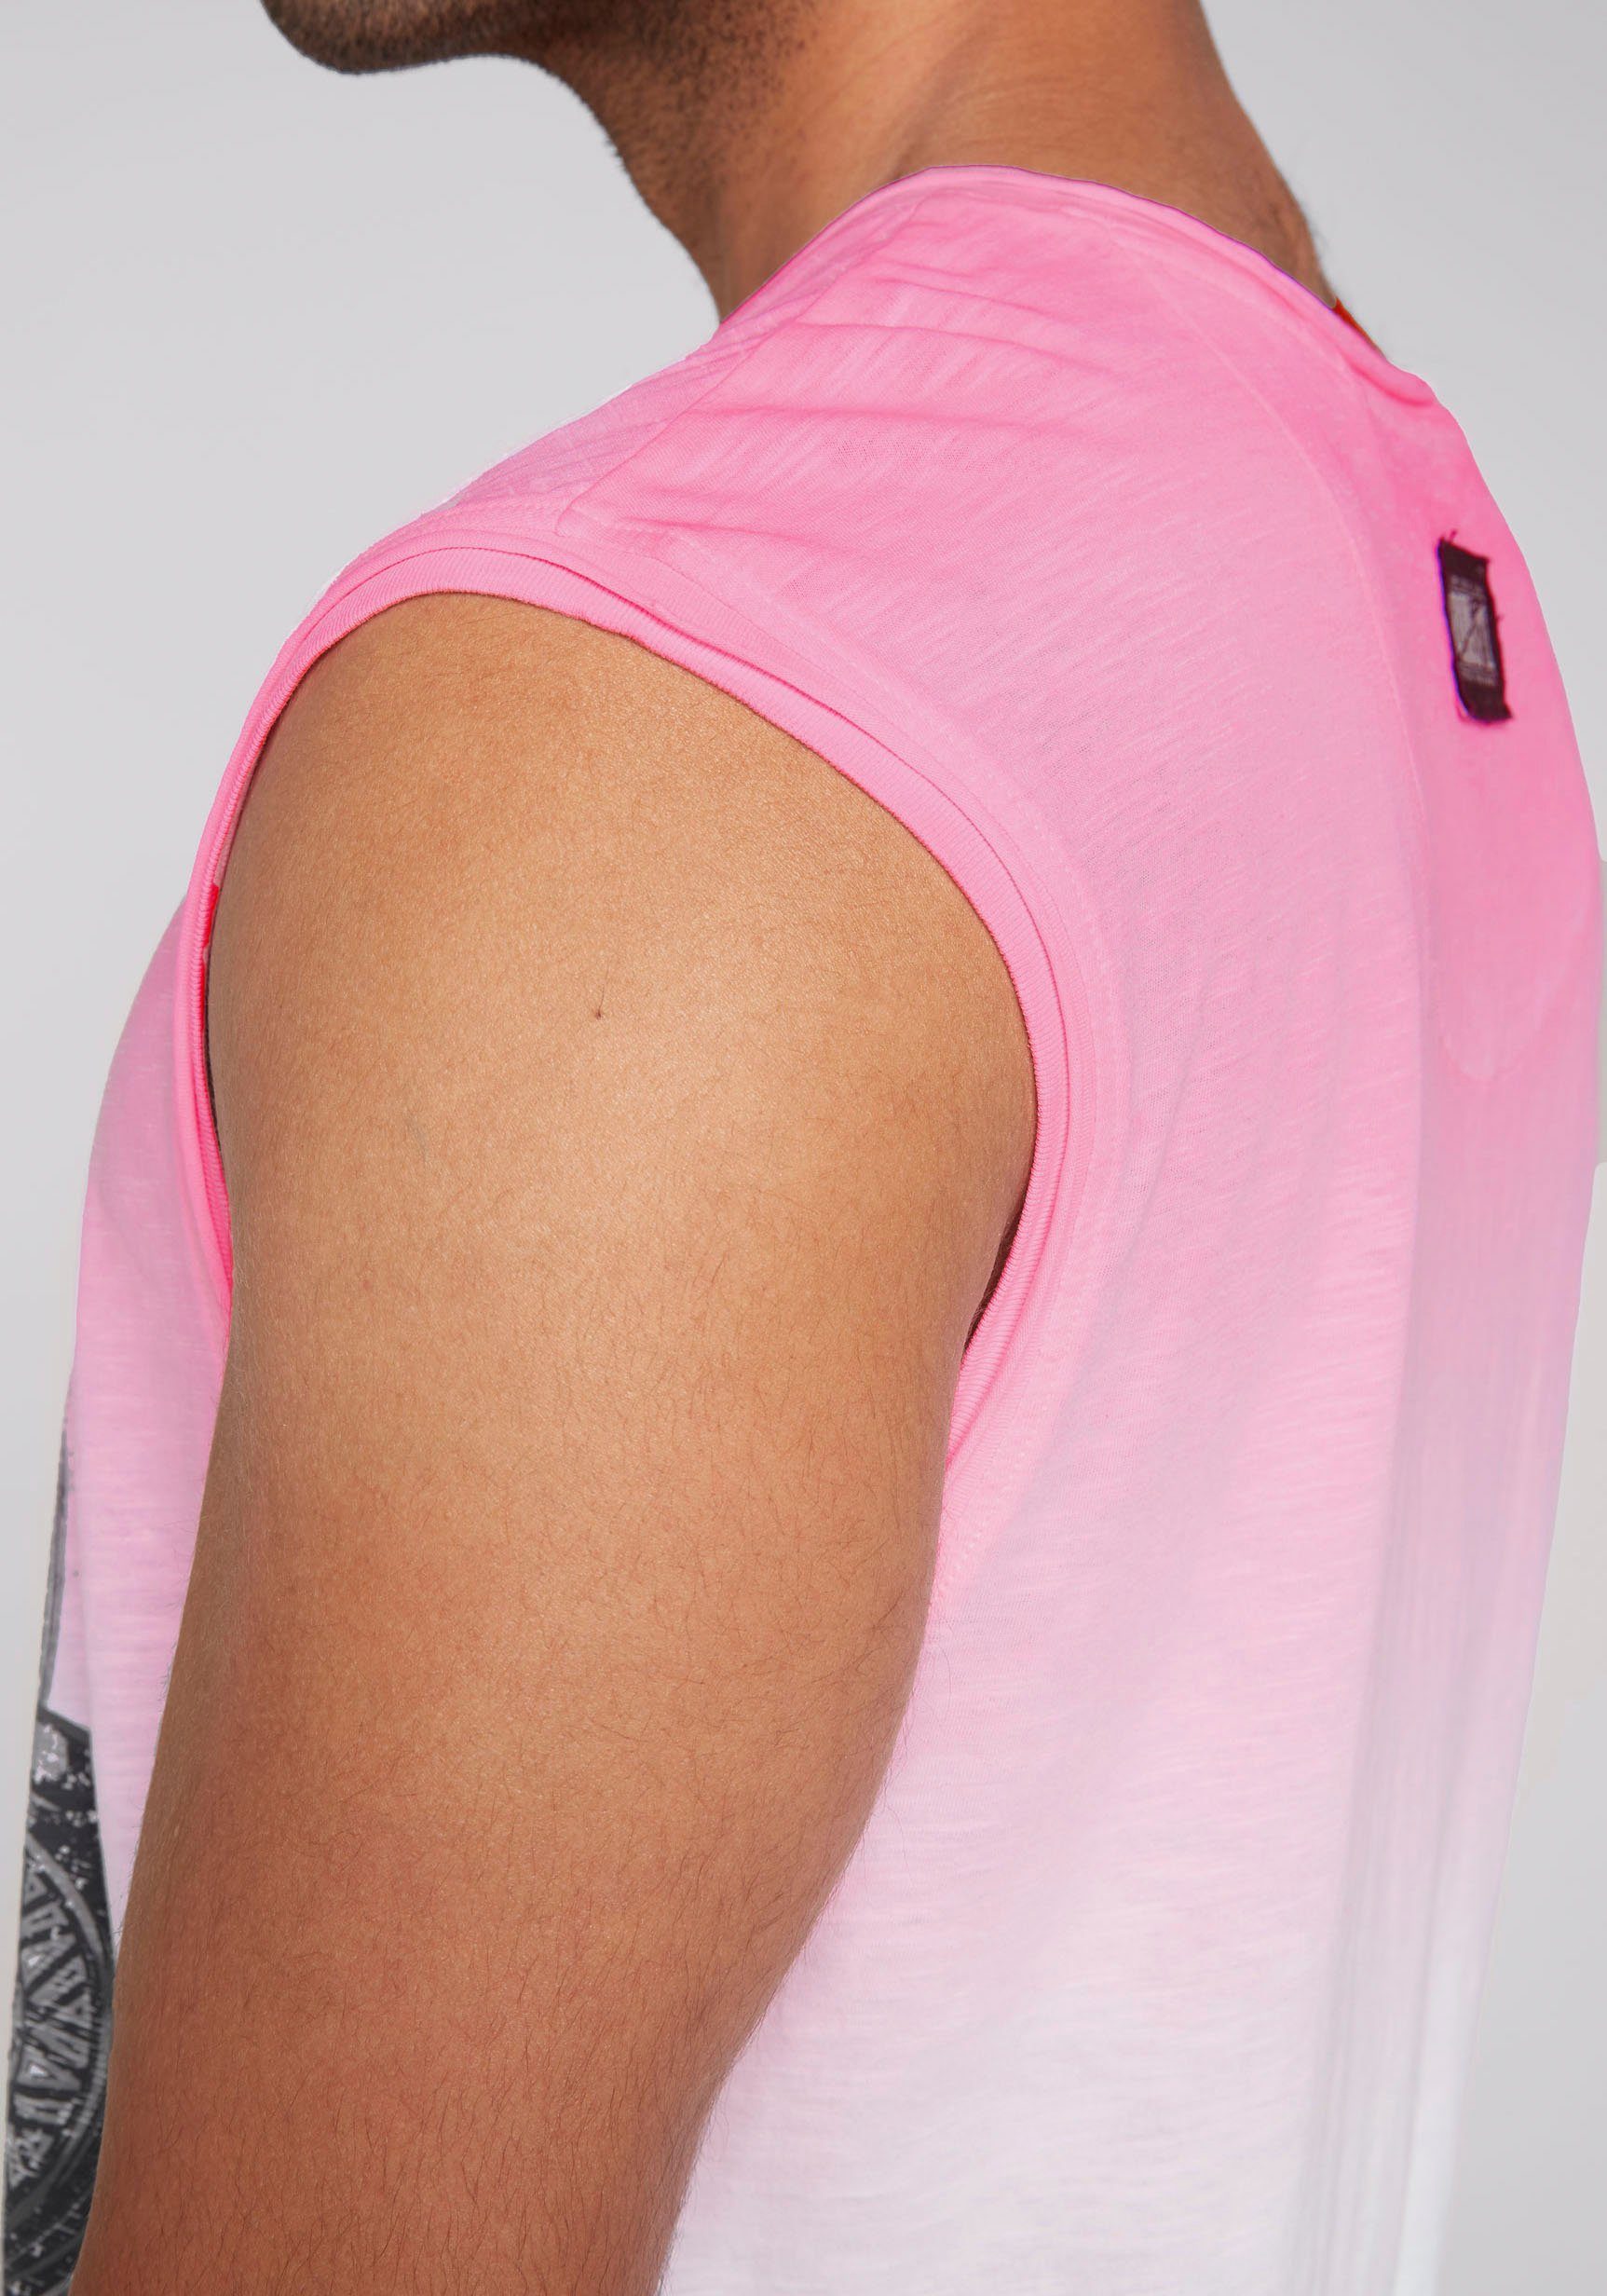 CAMP DAVID V-Shirt neon pink opticwhite 